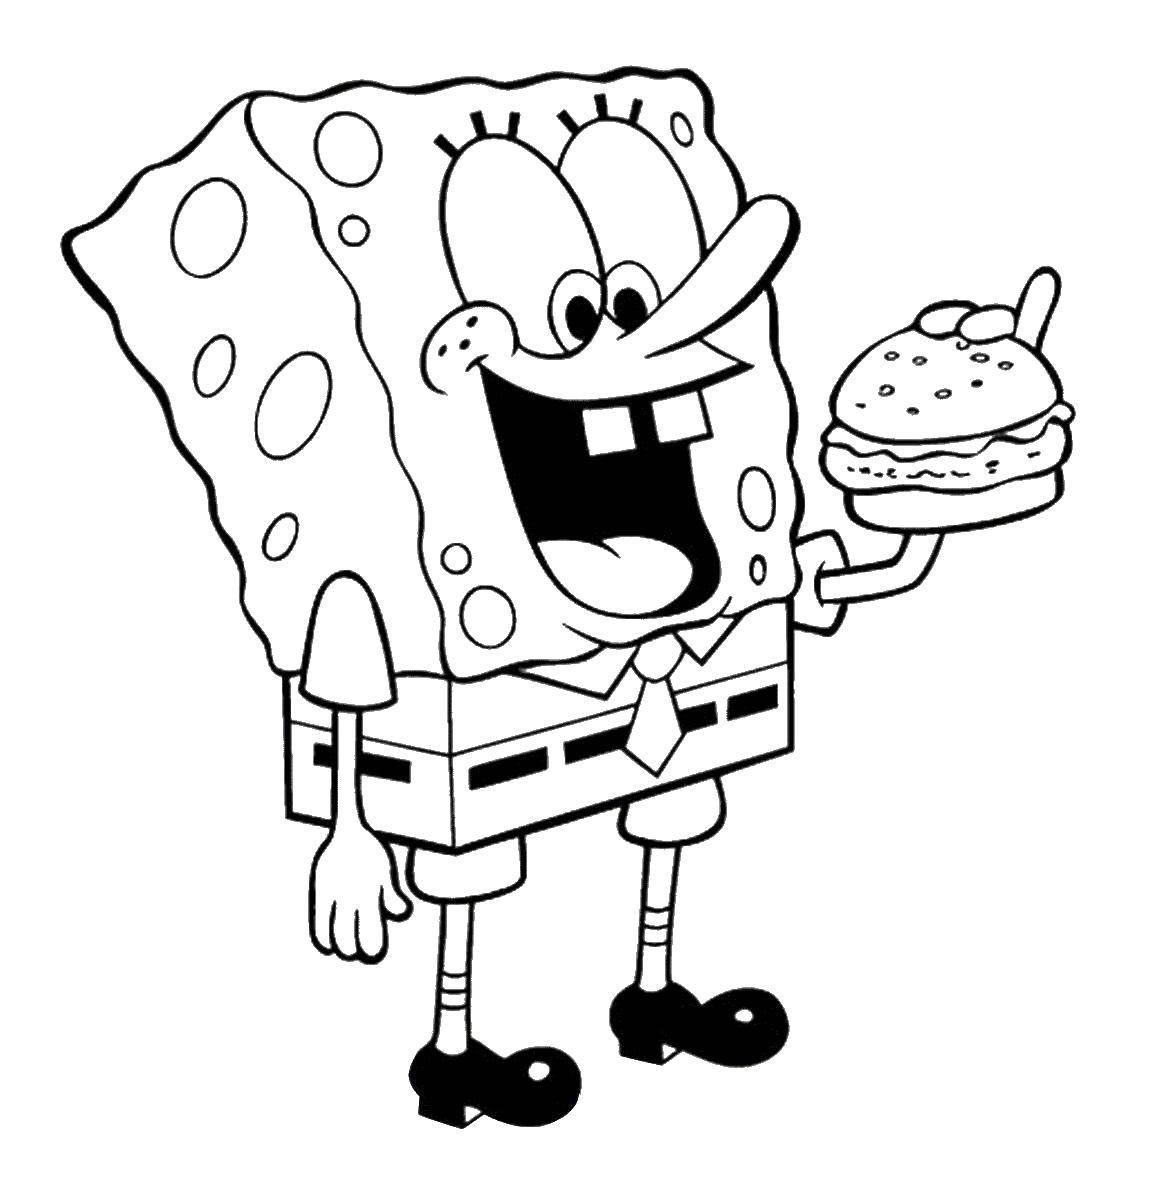 Coloring Spongebob with hamburger. Category spongebob. Tags:  the spongebob, Patrick.